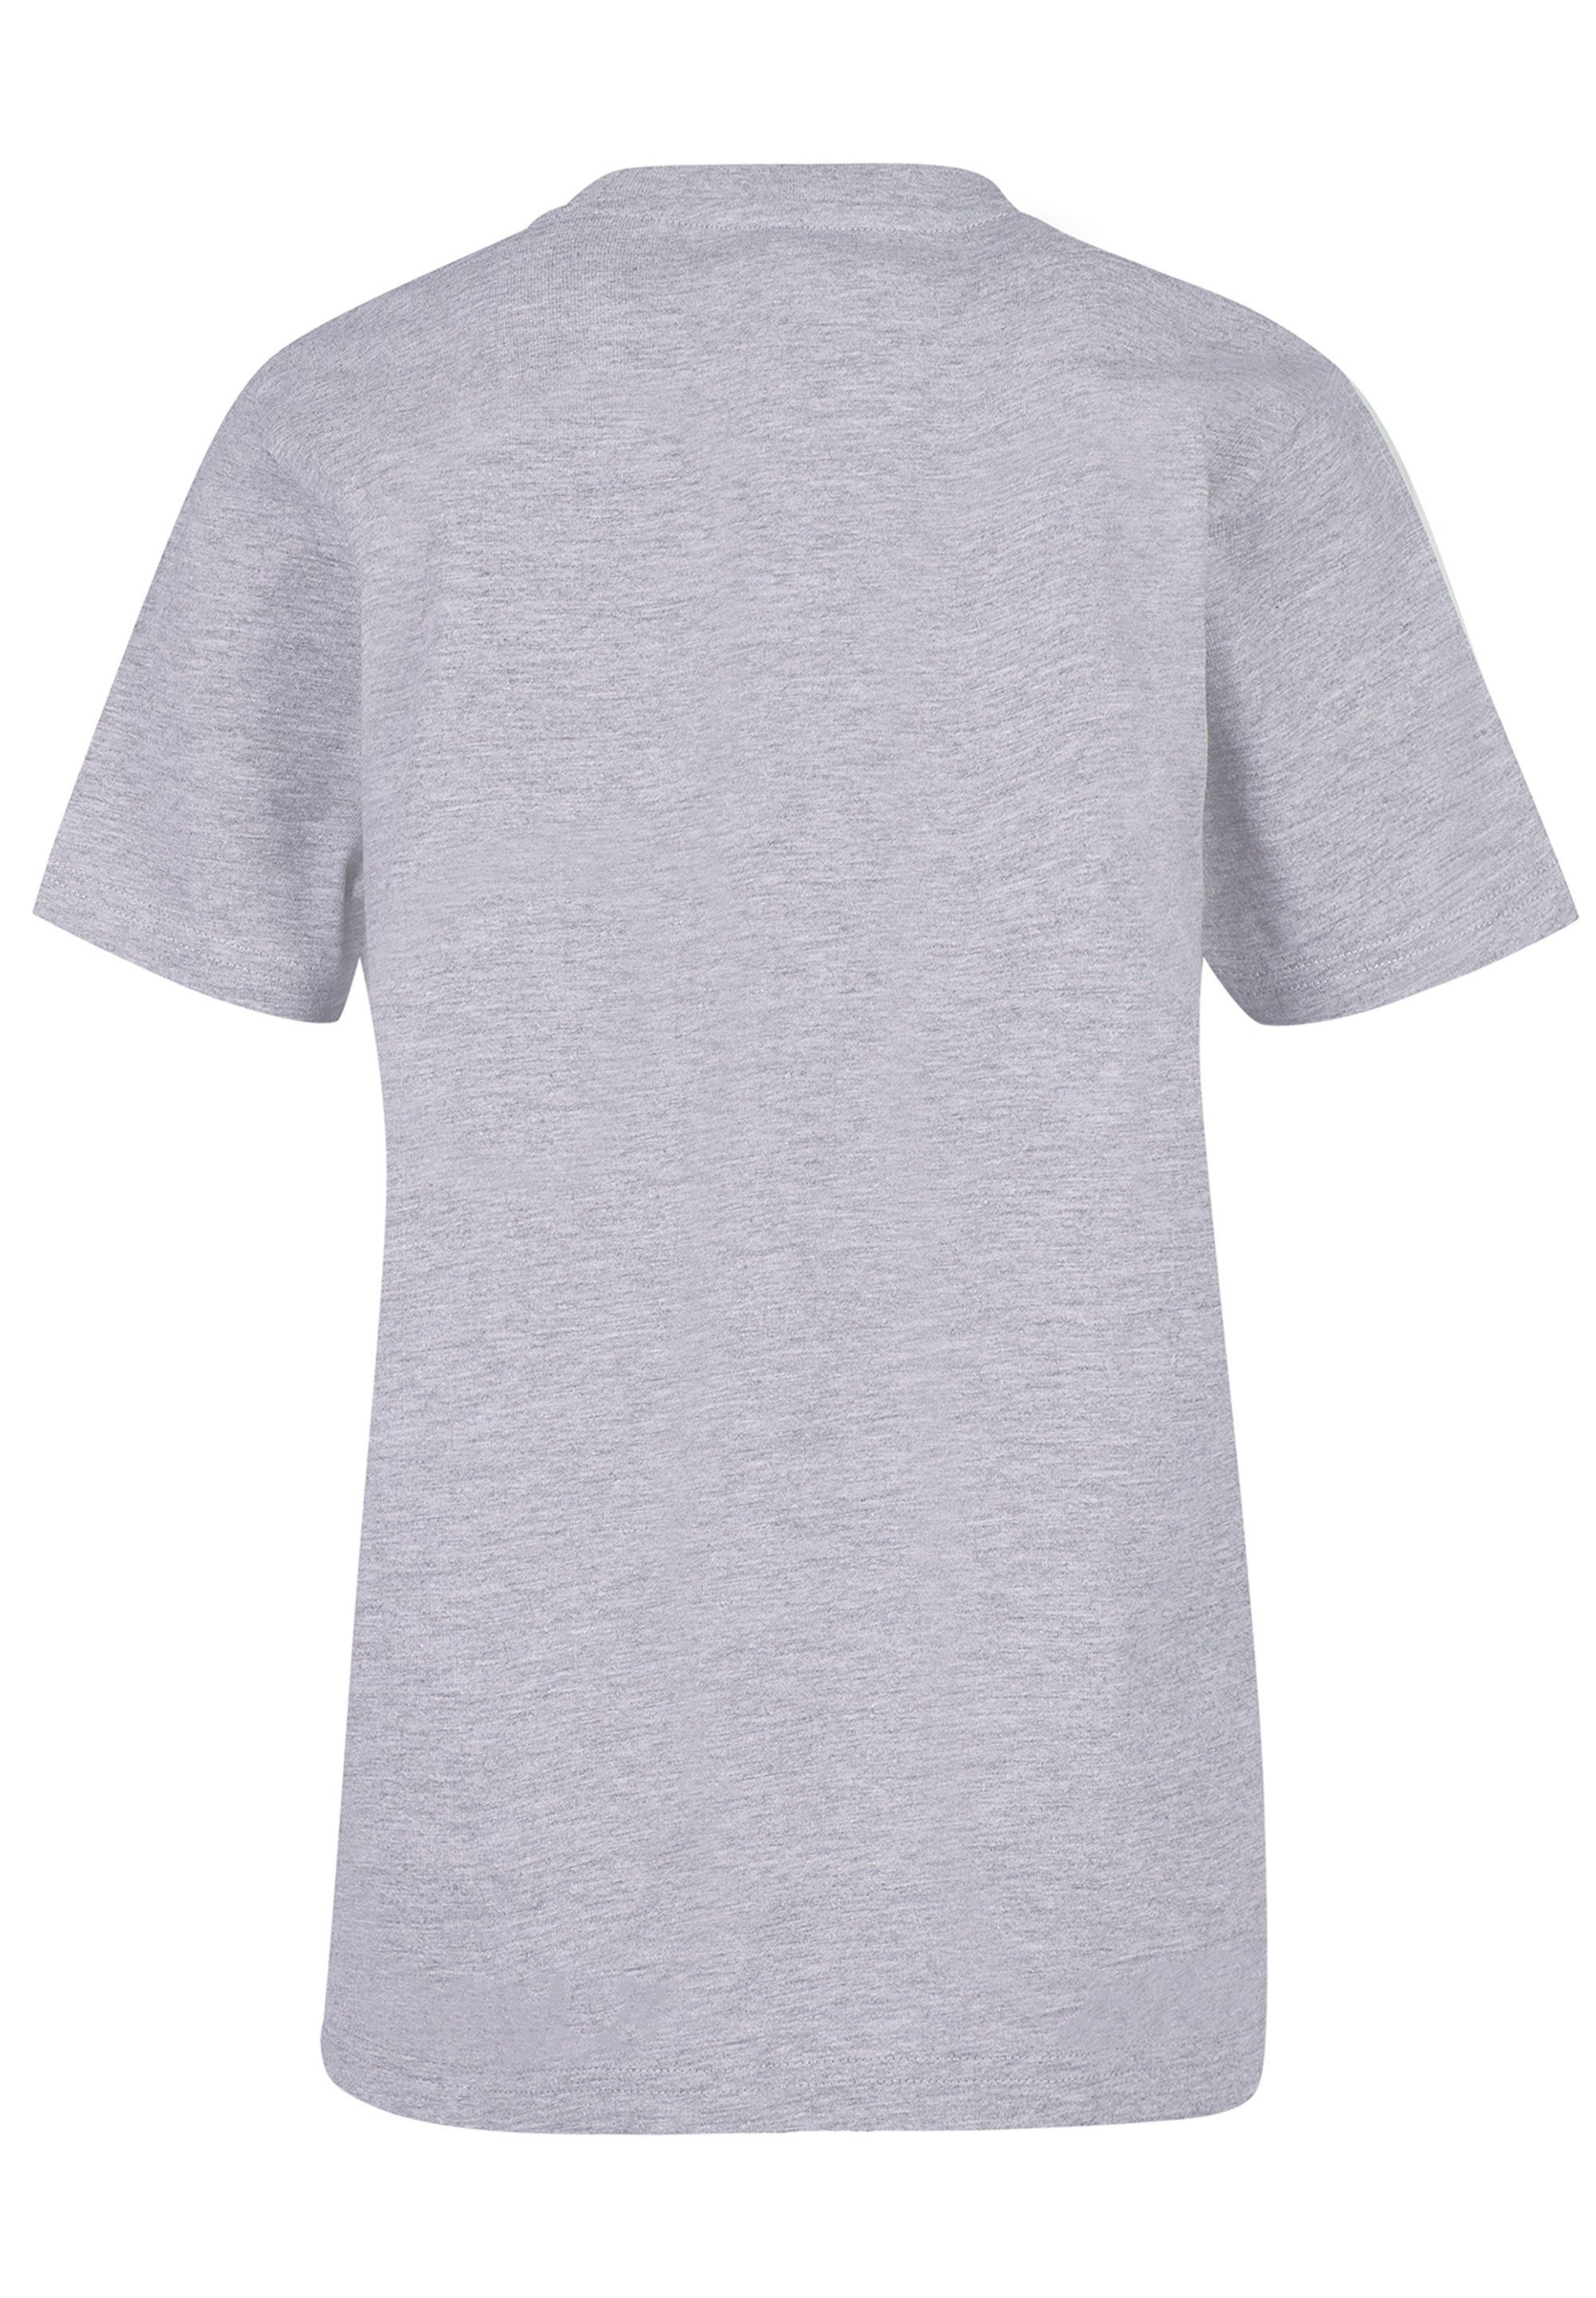 Print heather Happy Good T-Shirt F4NT4STIC Pixel Herz grey Vibes People